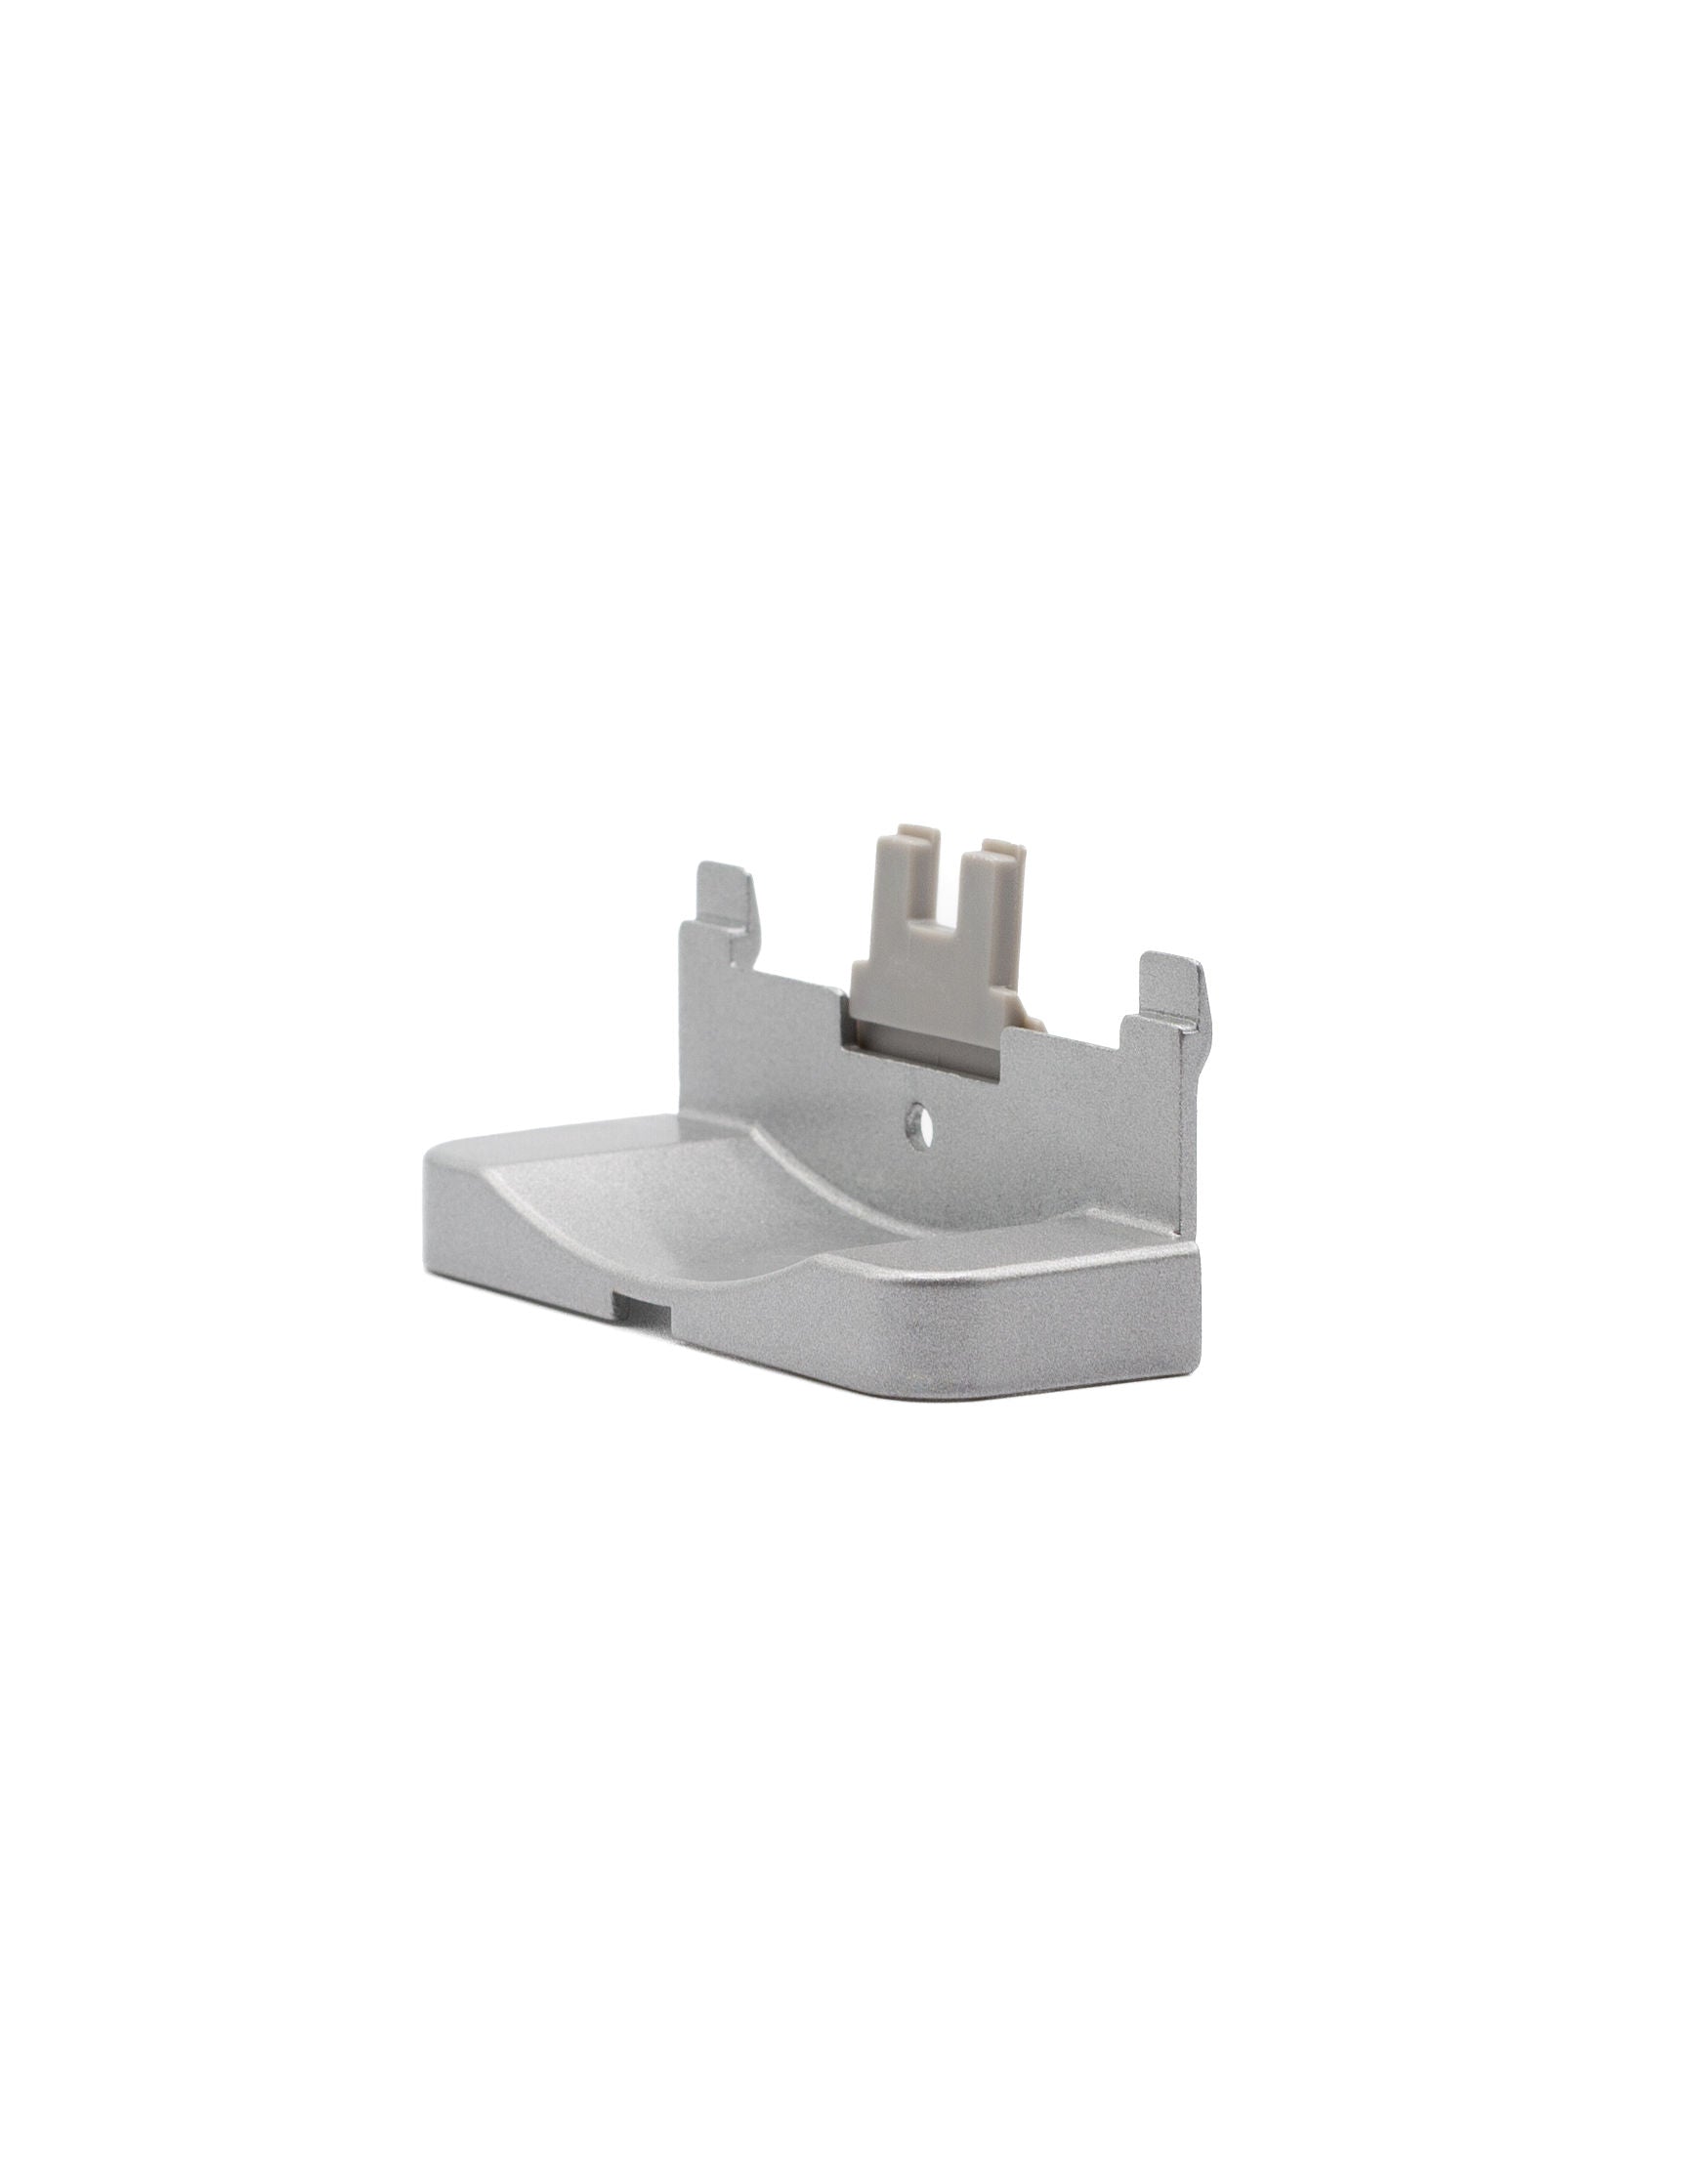 Coulisse Roller blind screw cap metal M - natural aluminium (RC3013-NA)